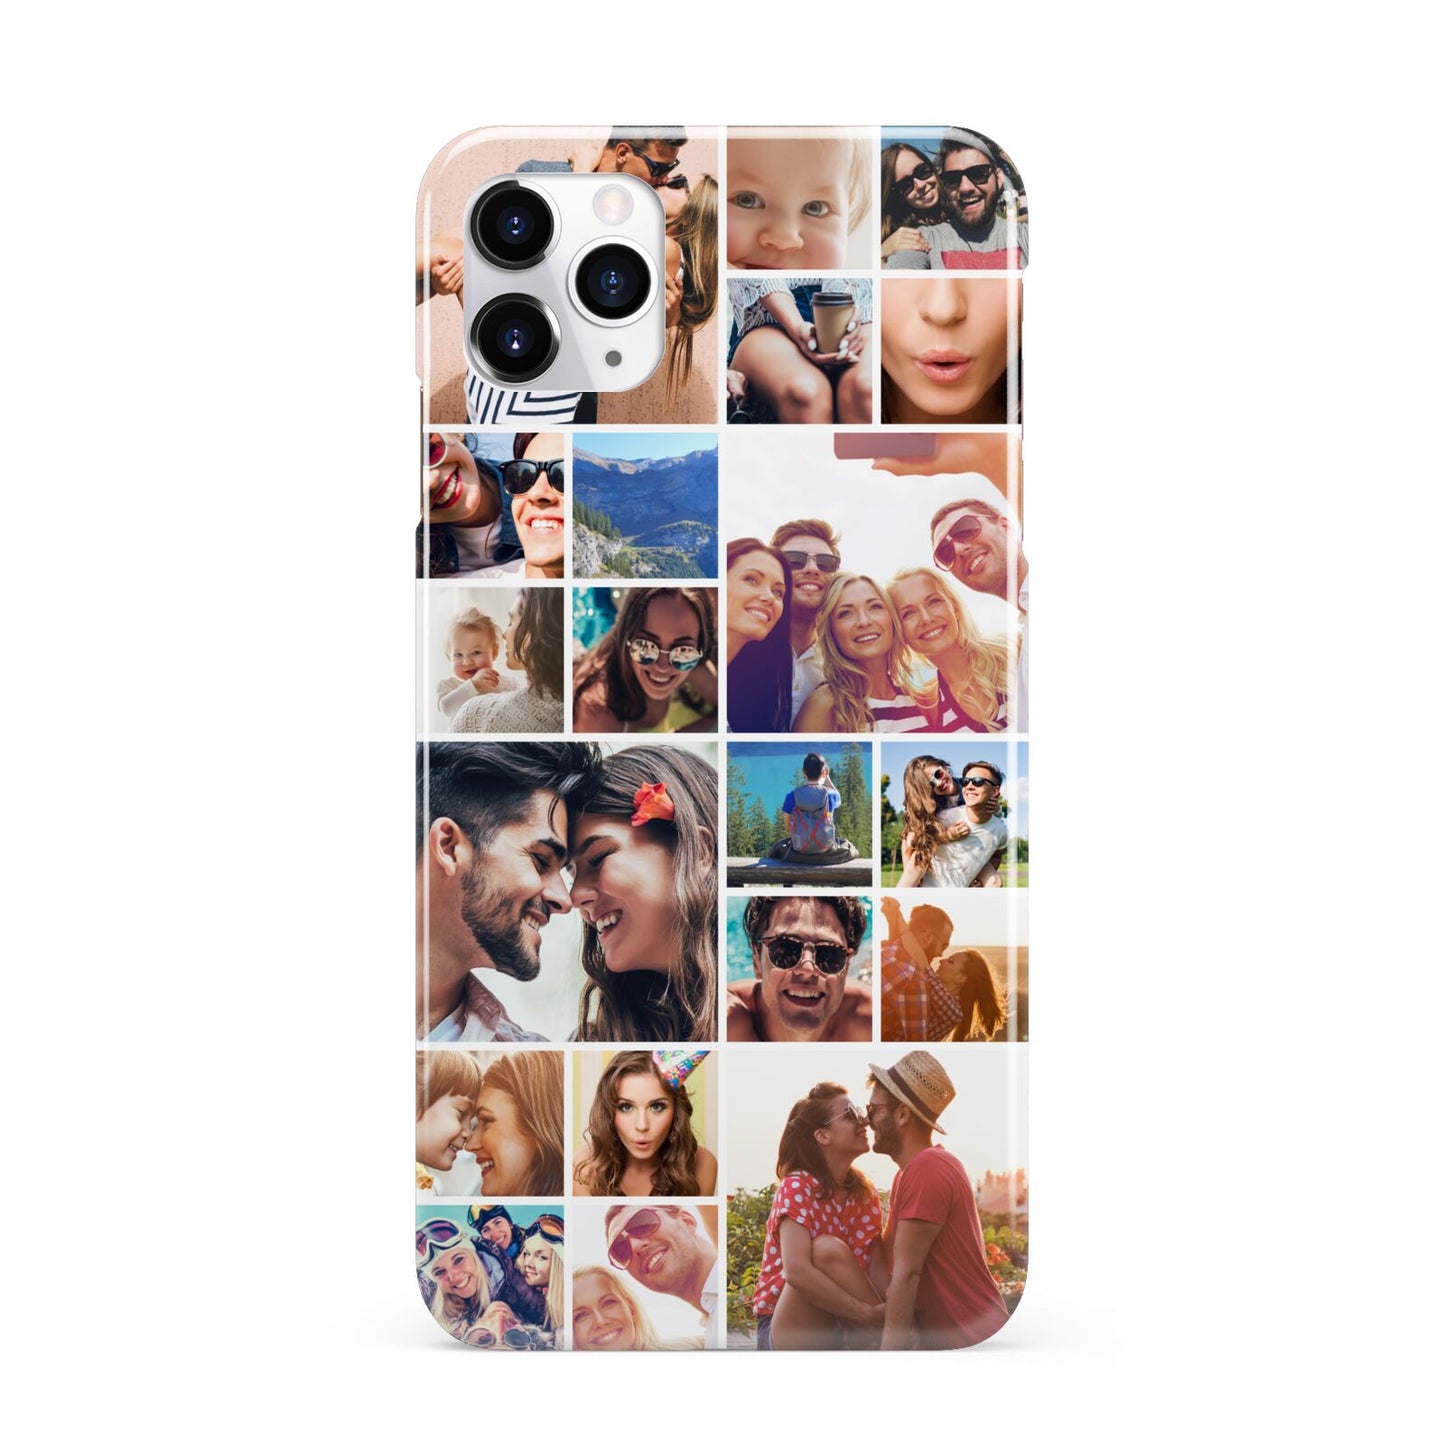 Photo Grid iPhone 11 Pro Max 3D Snap Case